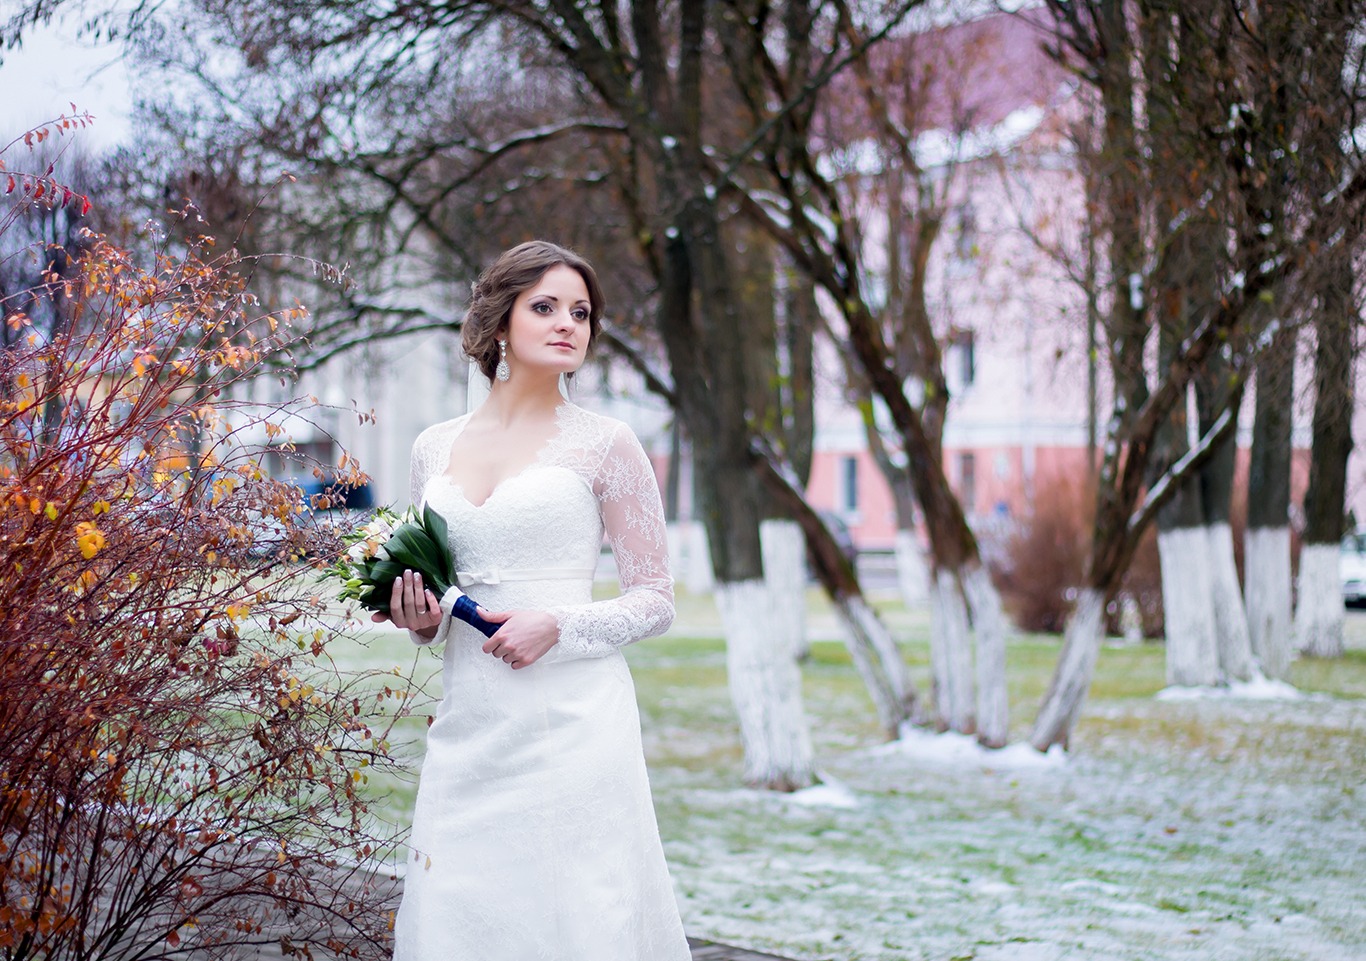 Невеста | Фотограф Алена Лавор | foto.by фото.бай